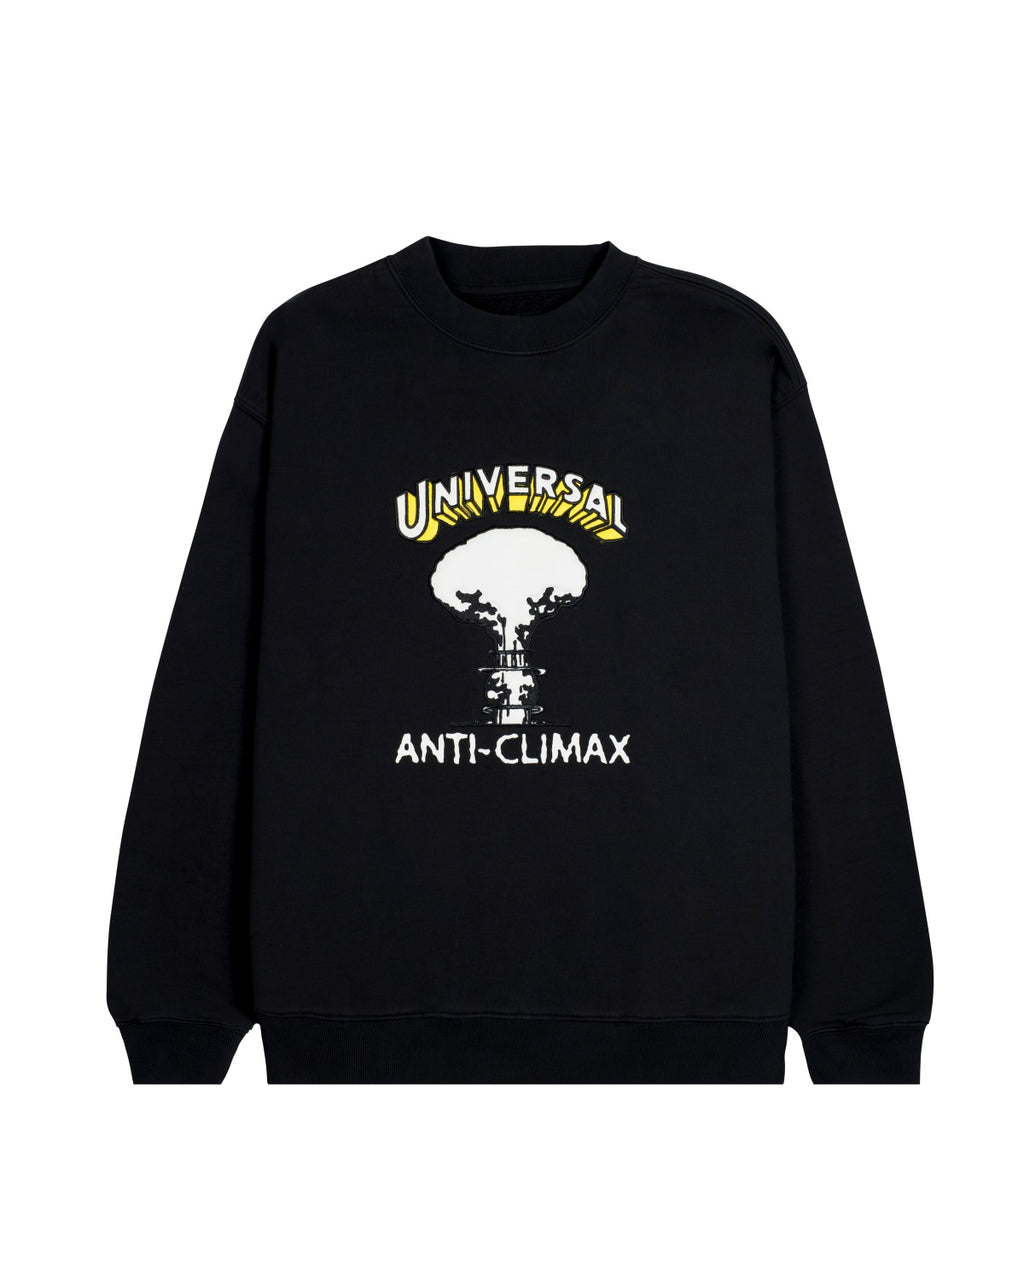 Universal Anti-Climax Crewneck Sweatshirt - Washed Black